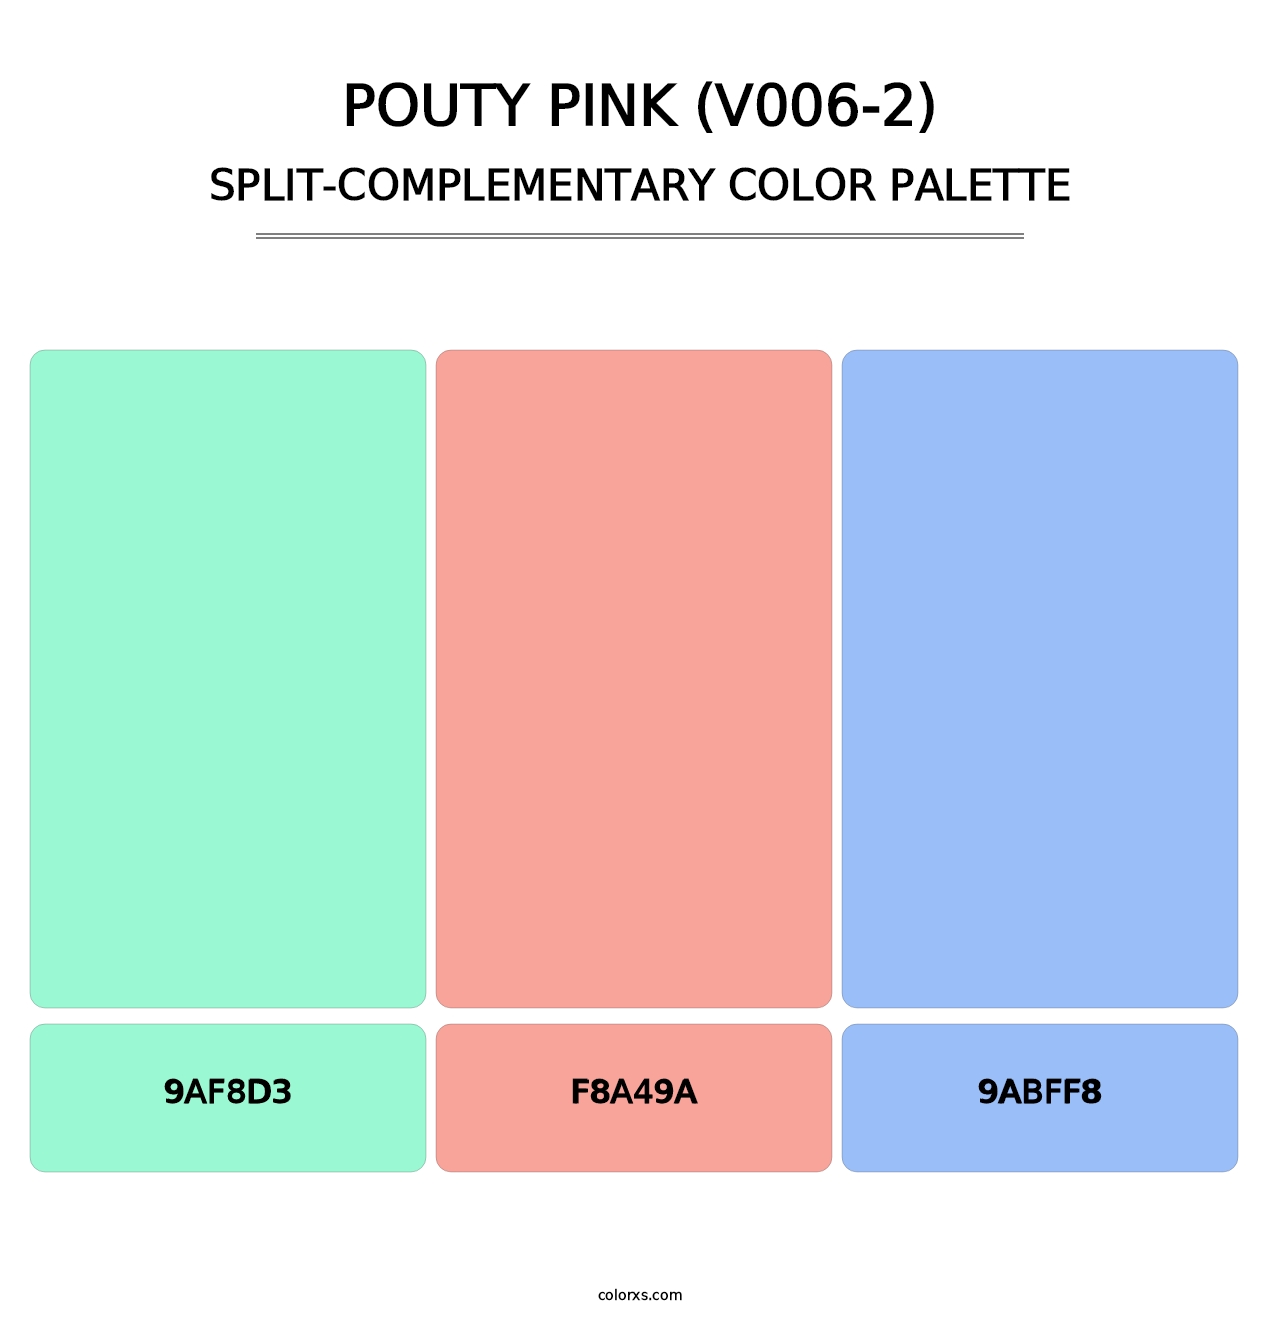 Pouty Pink (V006-2) - Split-Complementary Color Palette